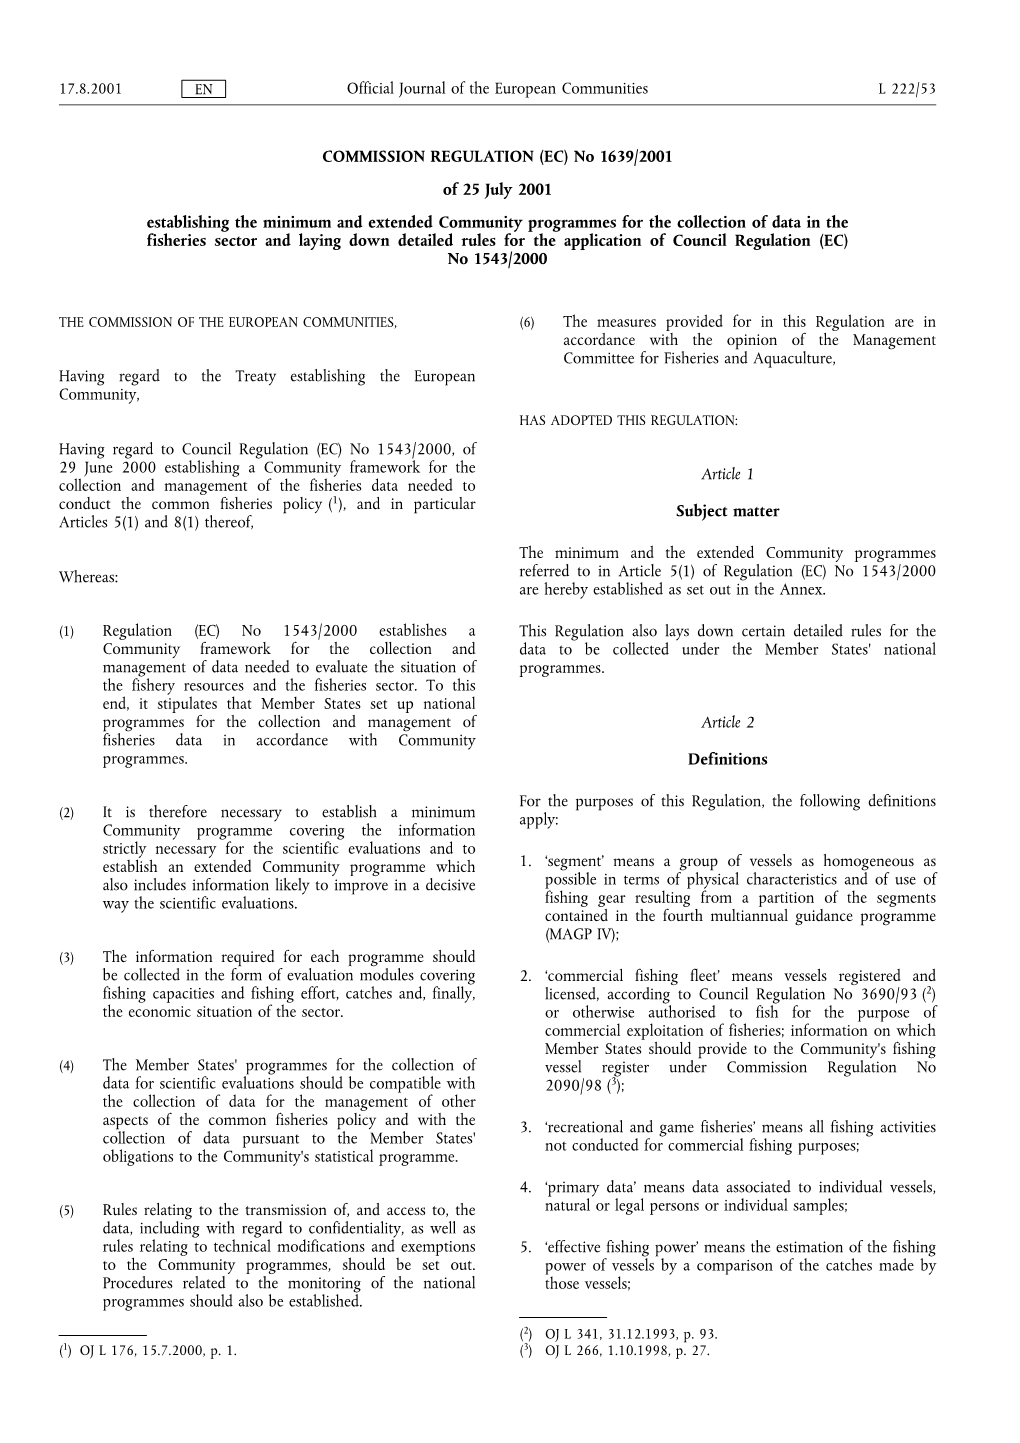 COMMISSION REGULATION (EC) No 1639/2001